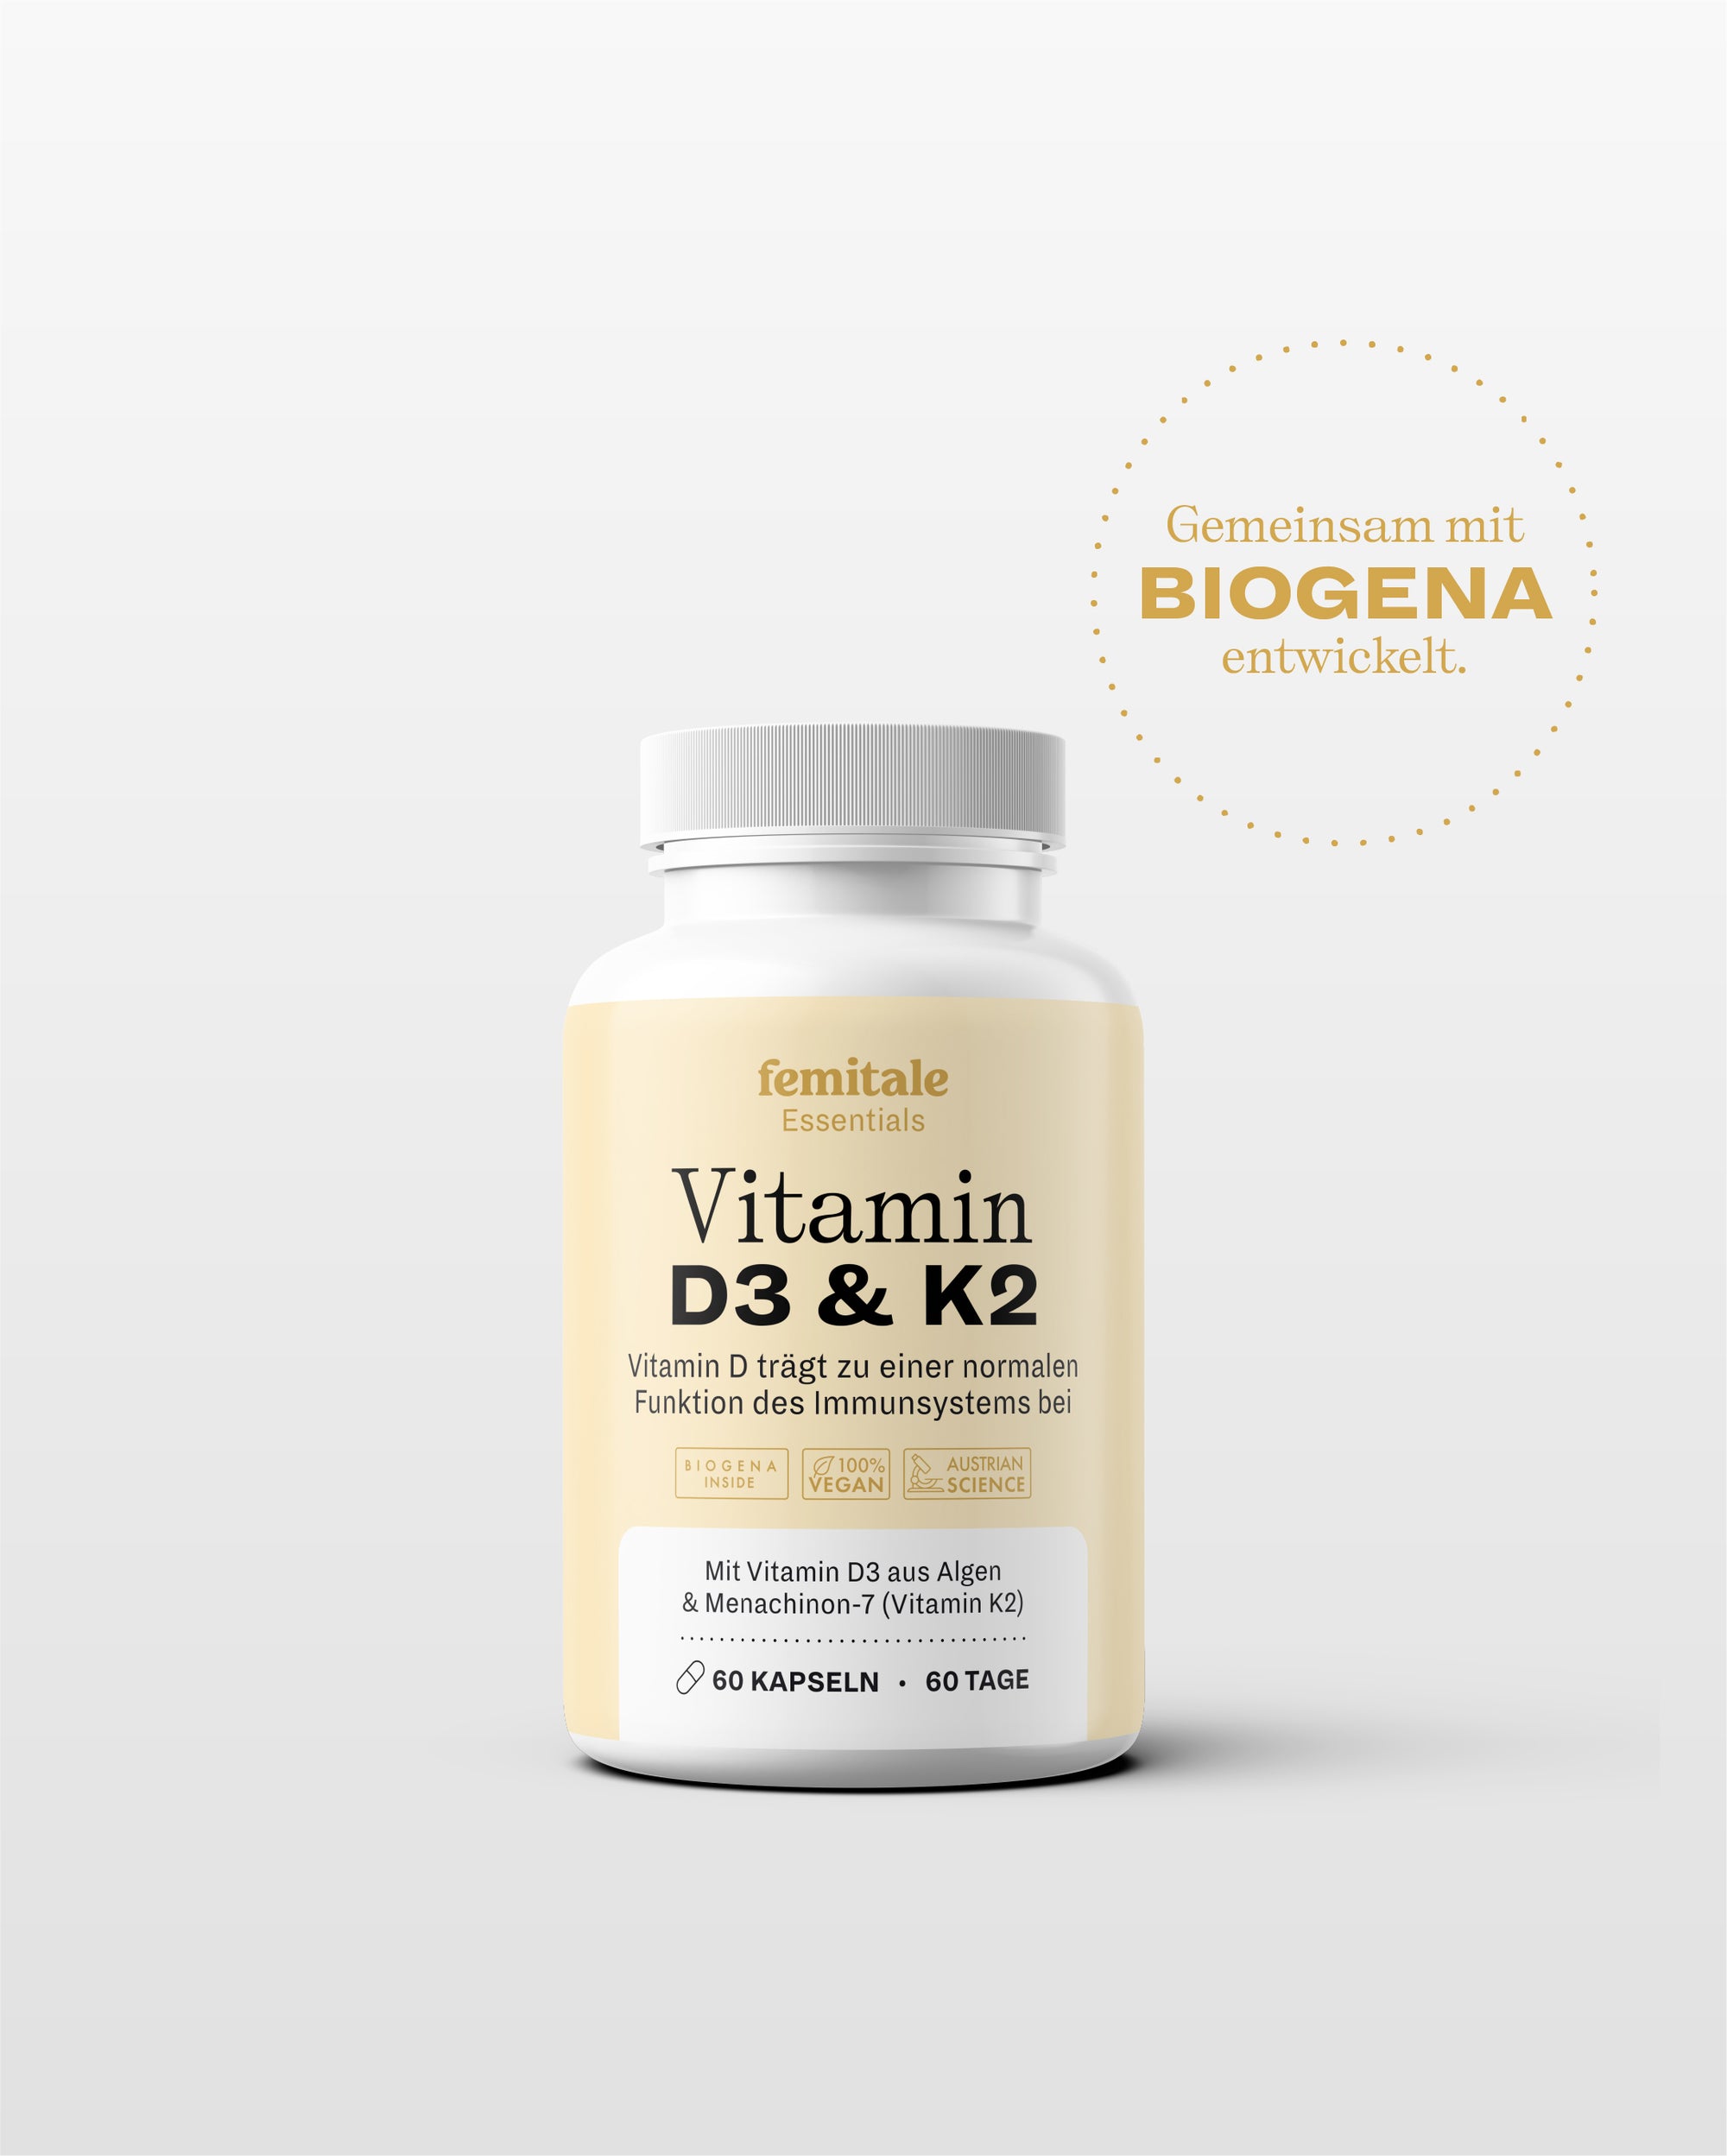 Vitamin D3 + K2 from algae